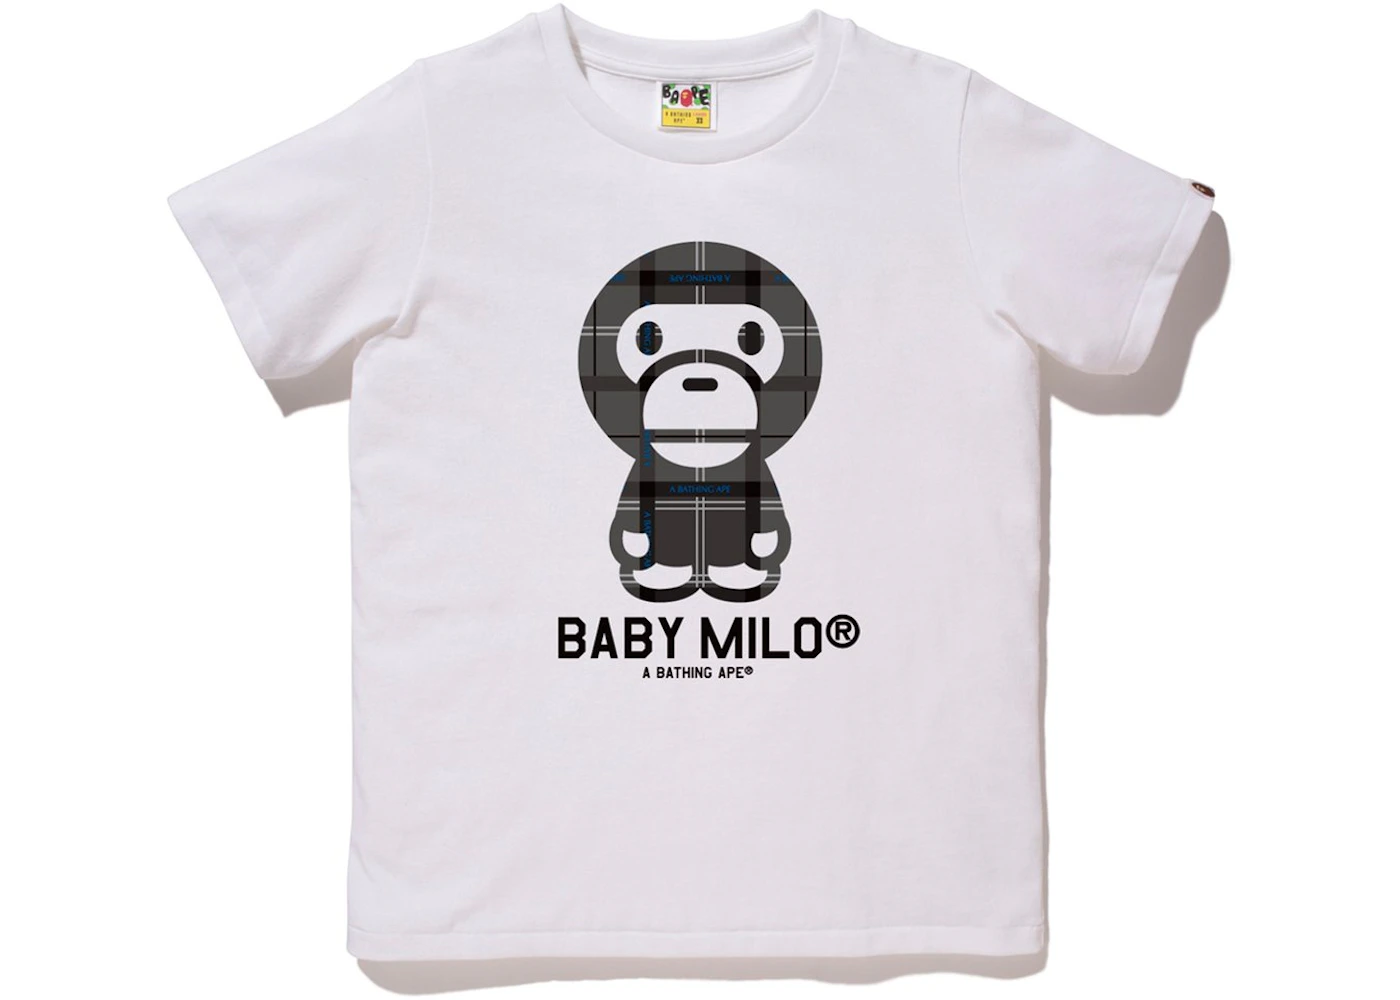 BAPE Logo Check Baby Milo Tee Whtie/Black - SS19 Men's - US